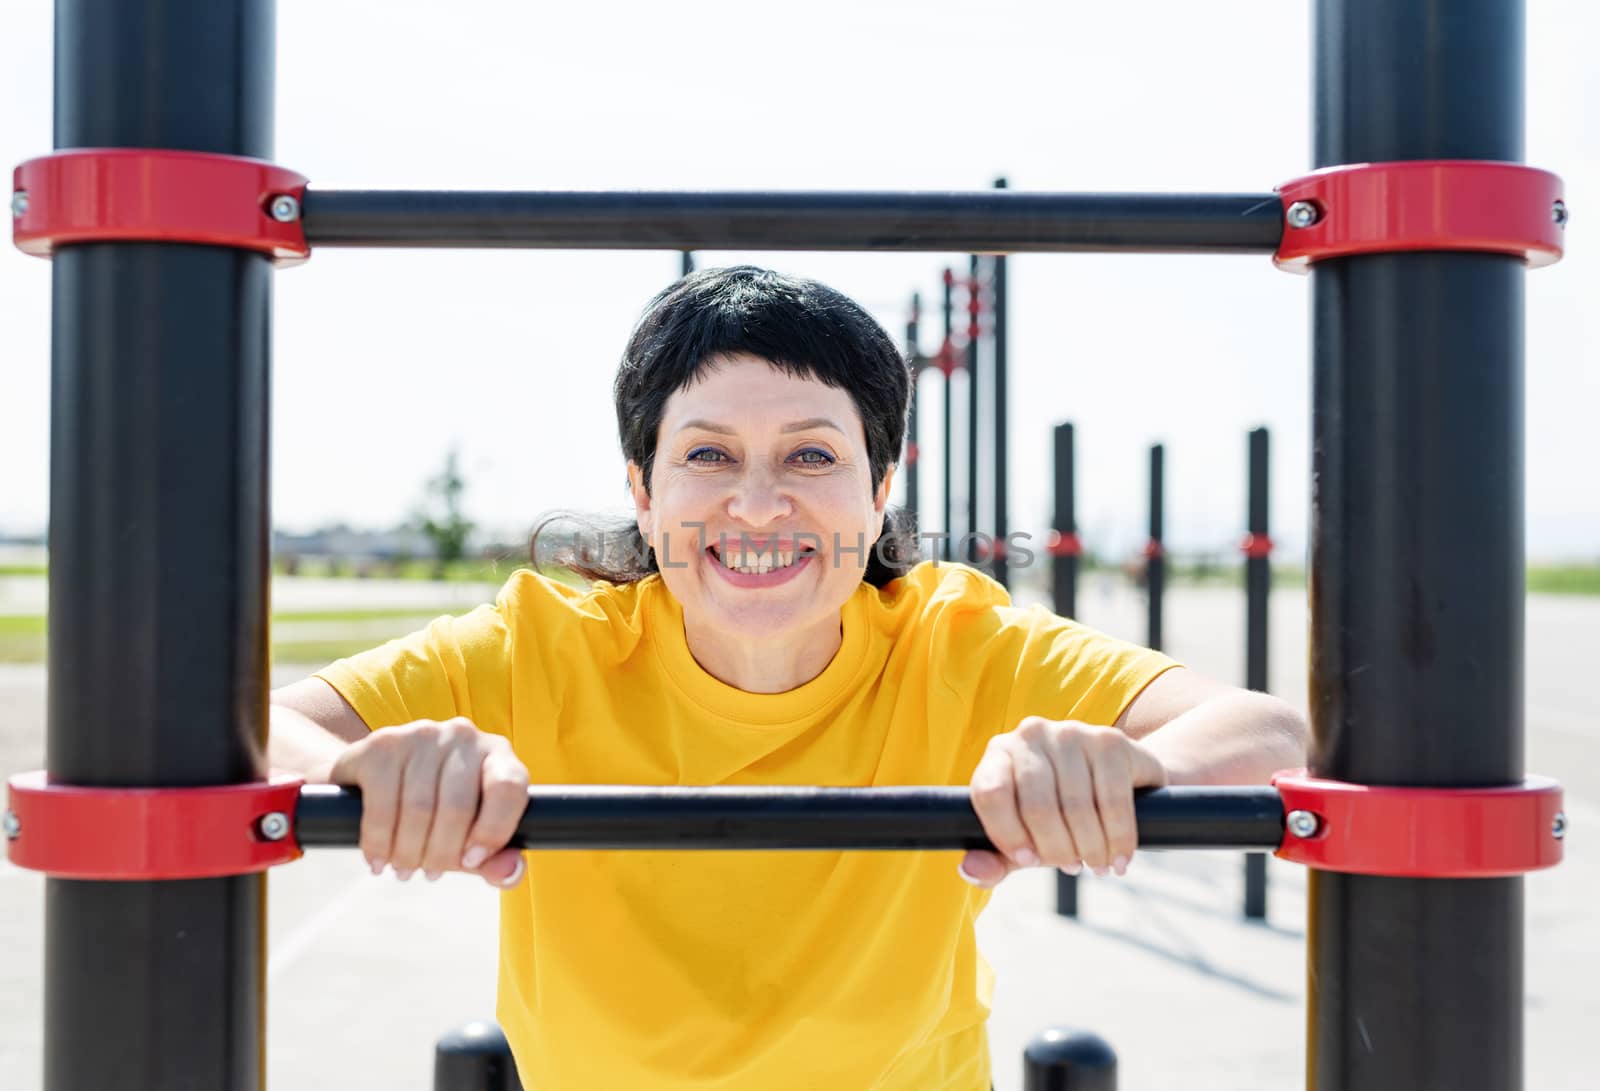 Sport and fitness. Senior sport. Active seniors. Smiling senior woman doing push-ups outdoors